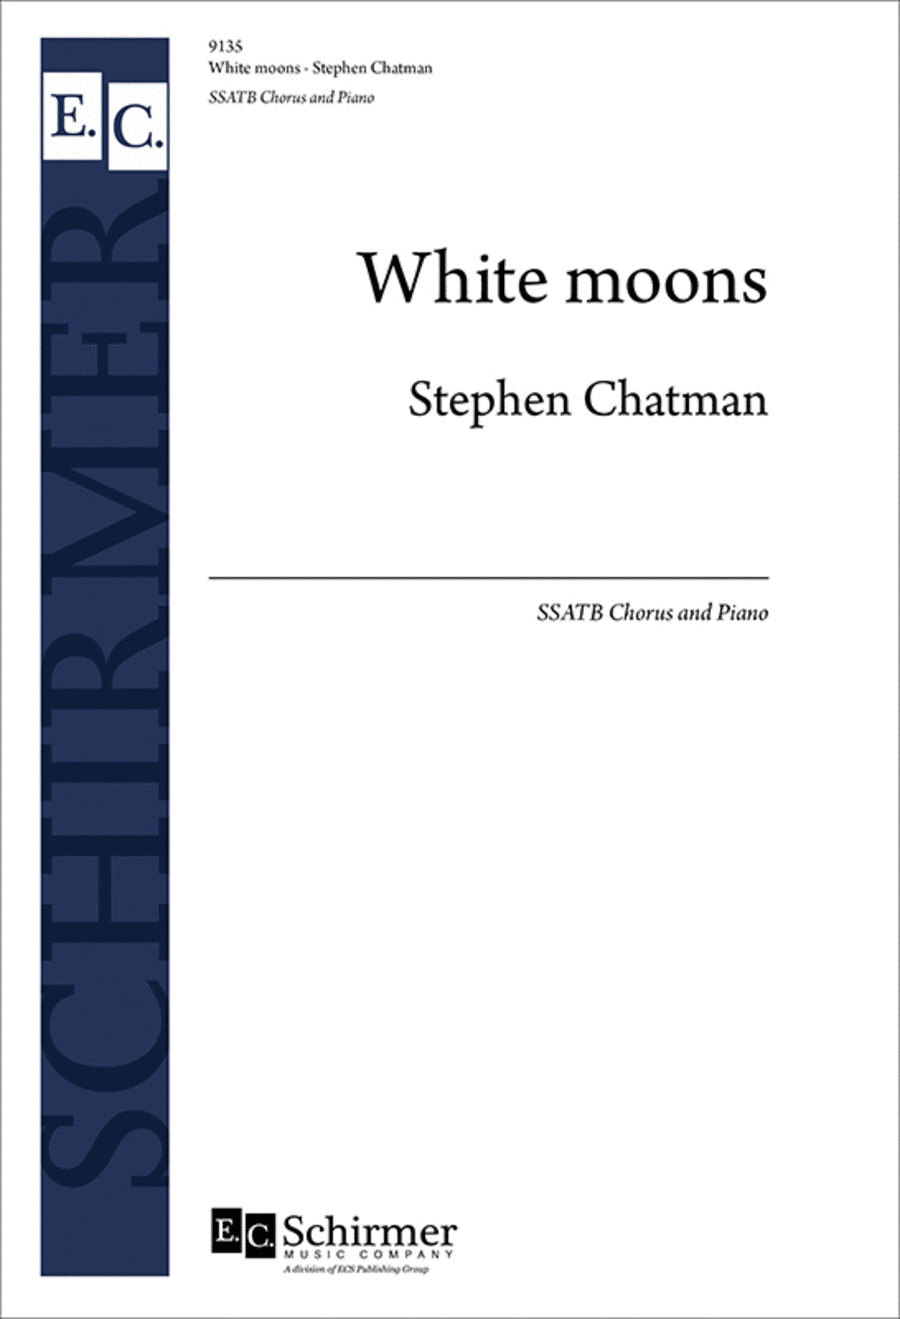 White moons